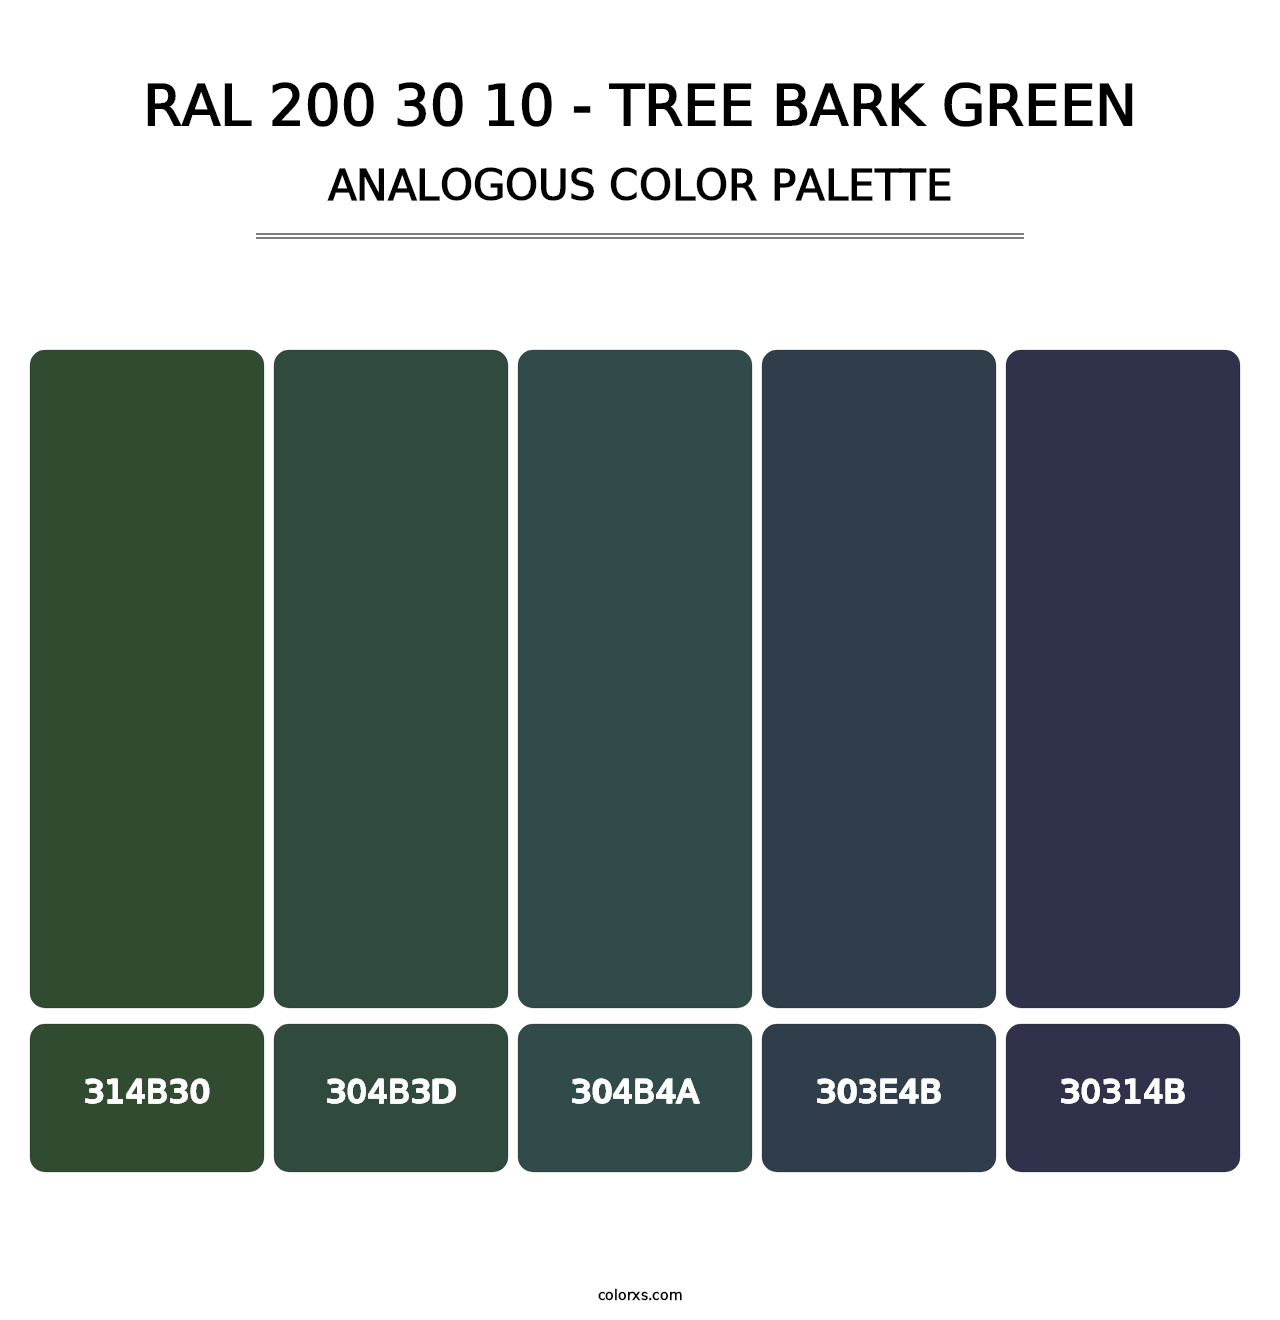 RAL 200 30 10 - Tree Bark Green - Analogous Color Palette